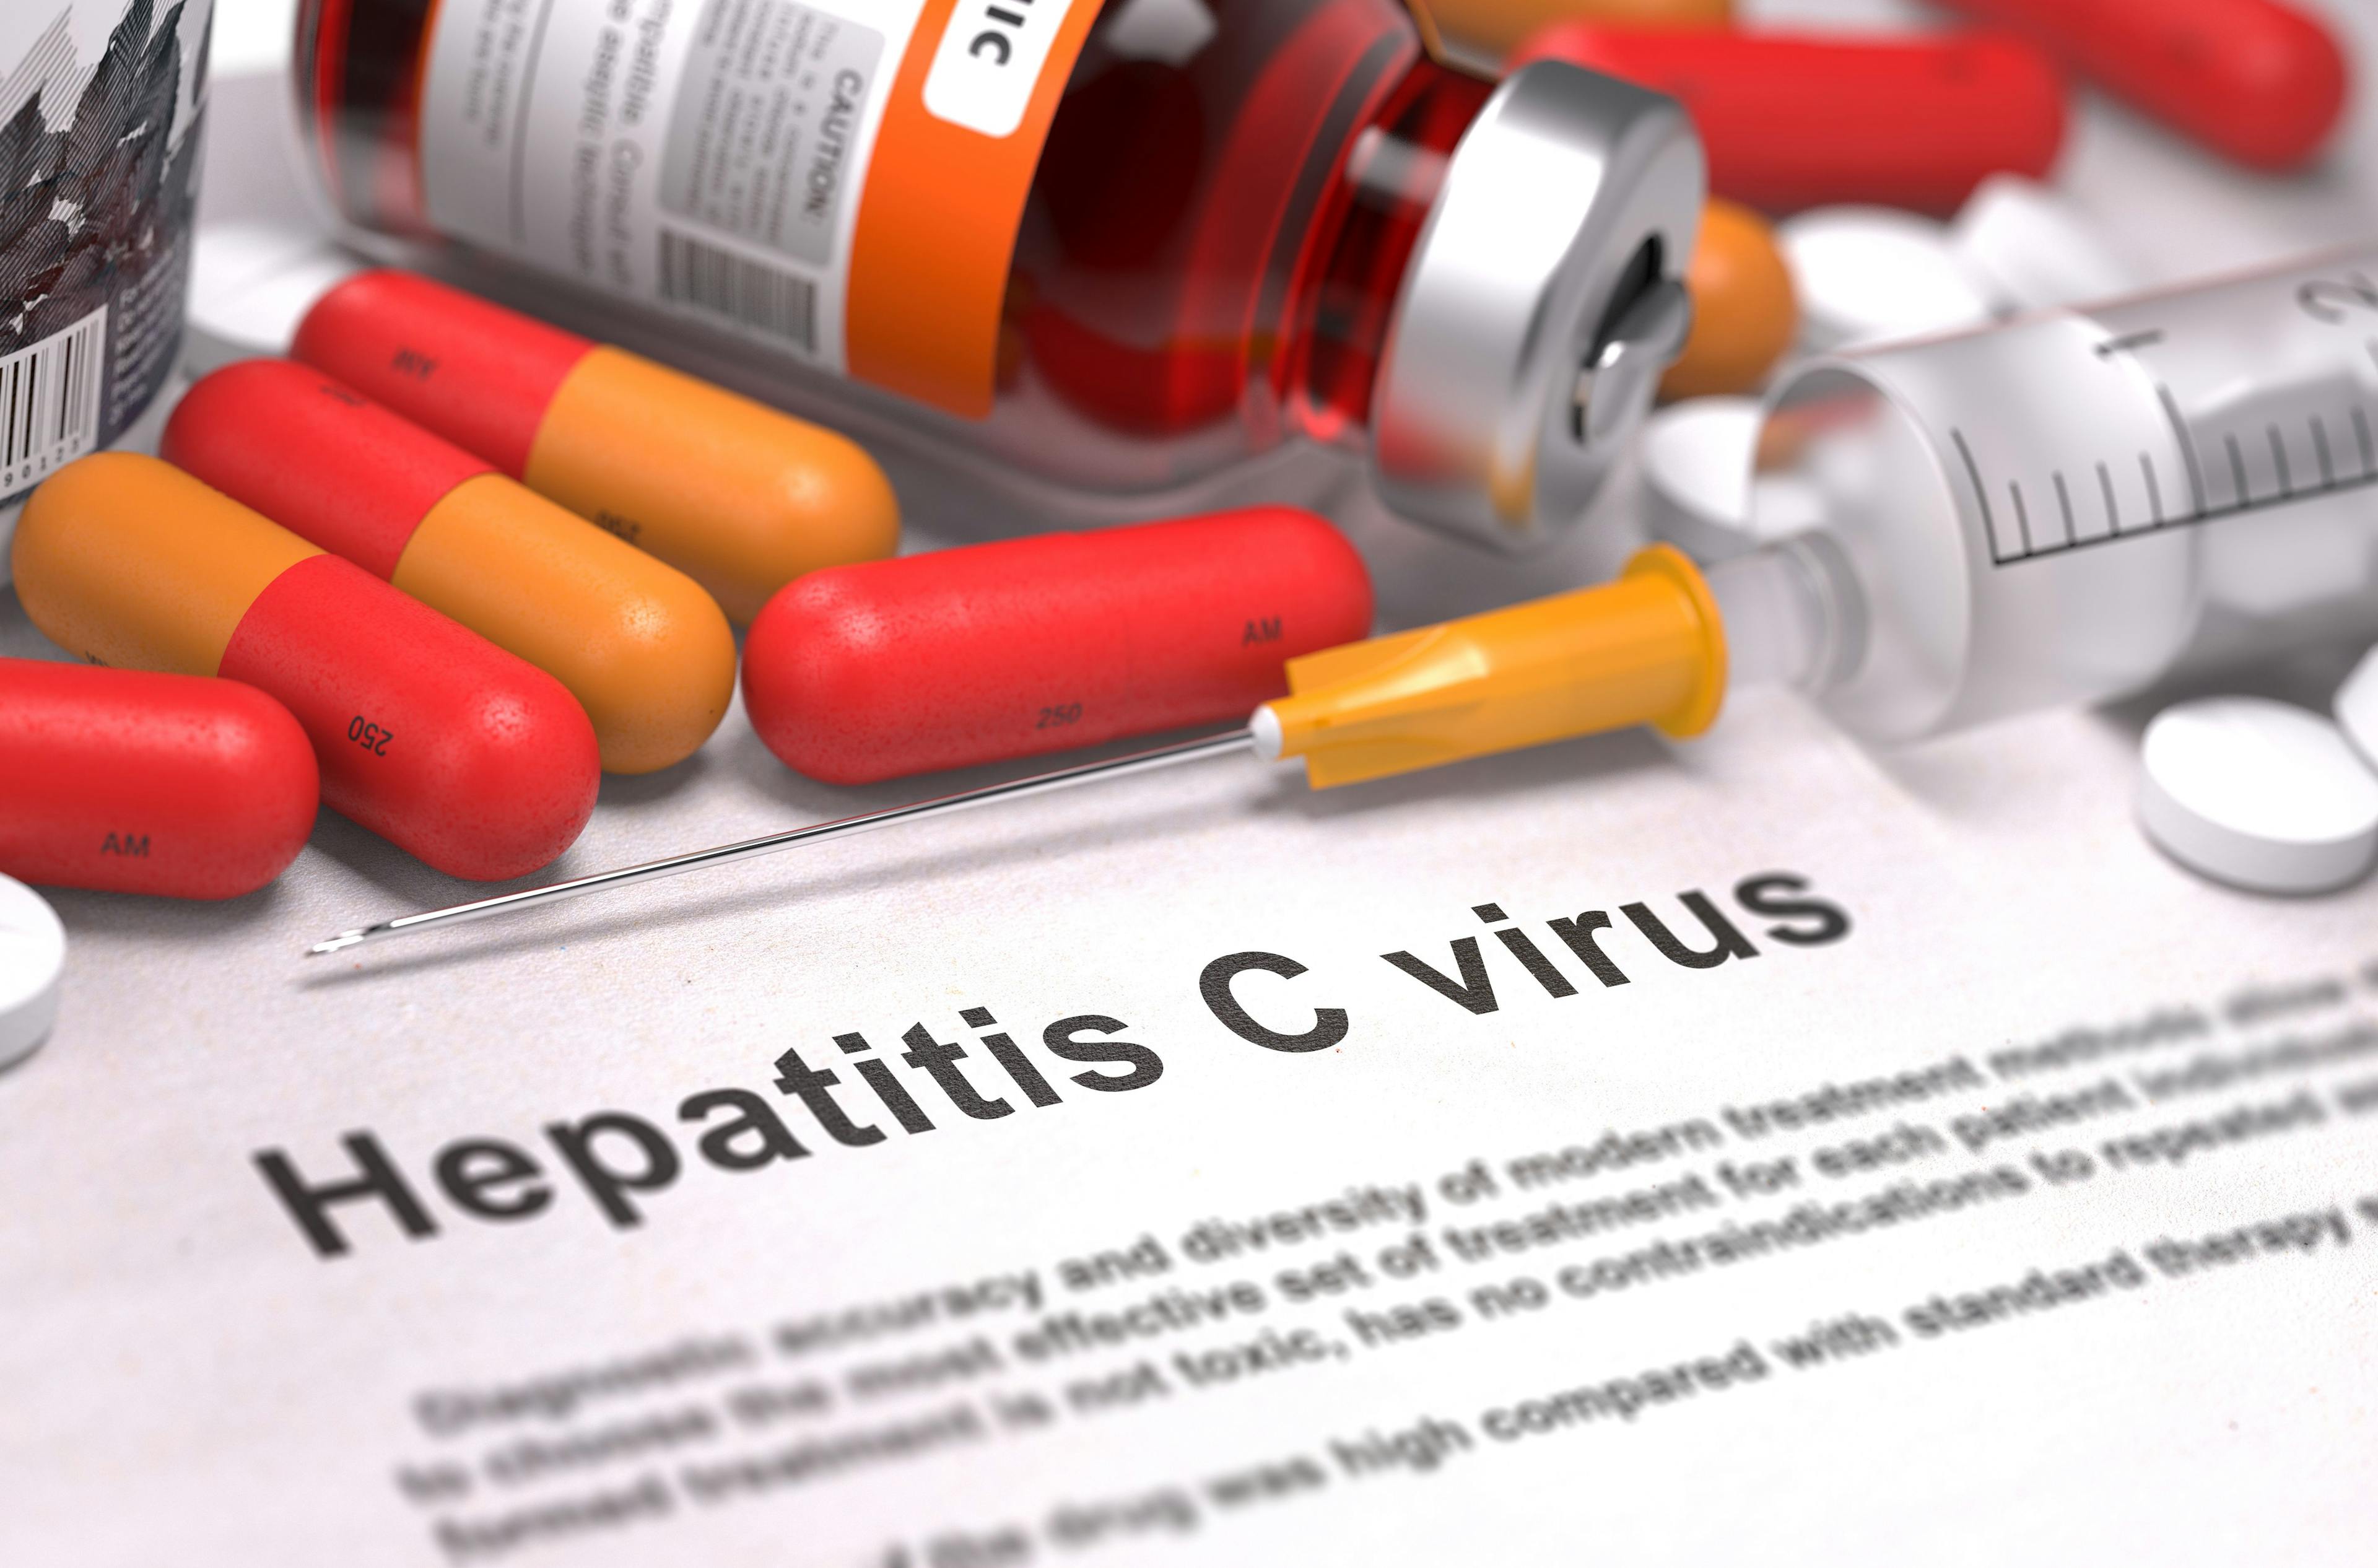 Hepatitis C Treatment Initiation Low Among Medicaid Recipients